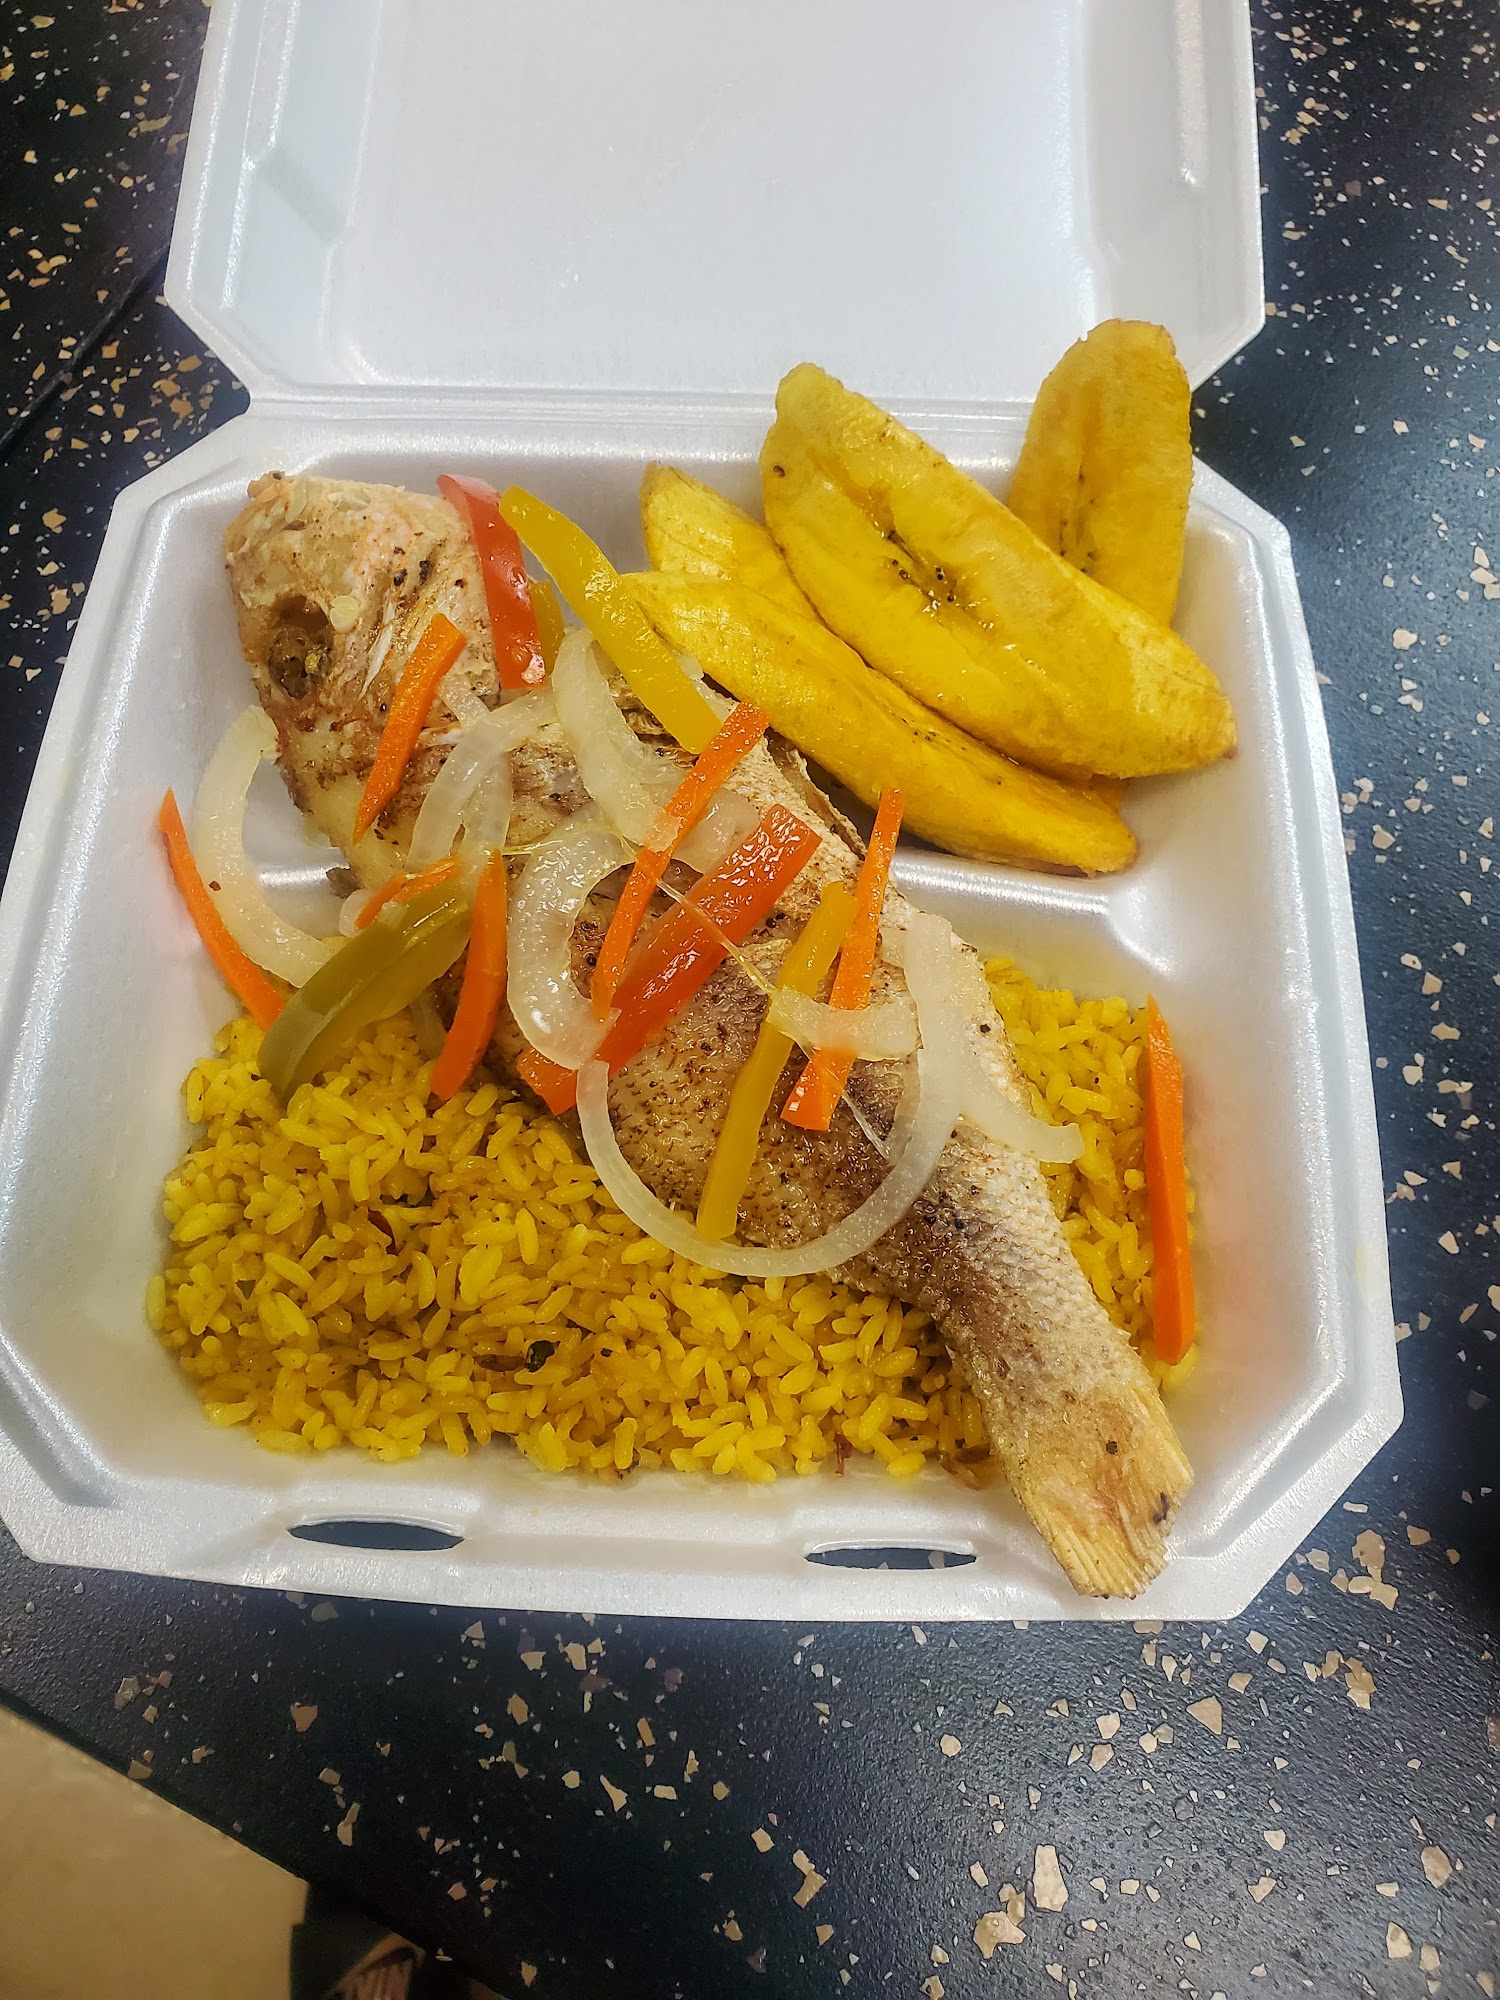 Island Jamaican Spice